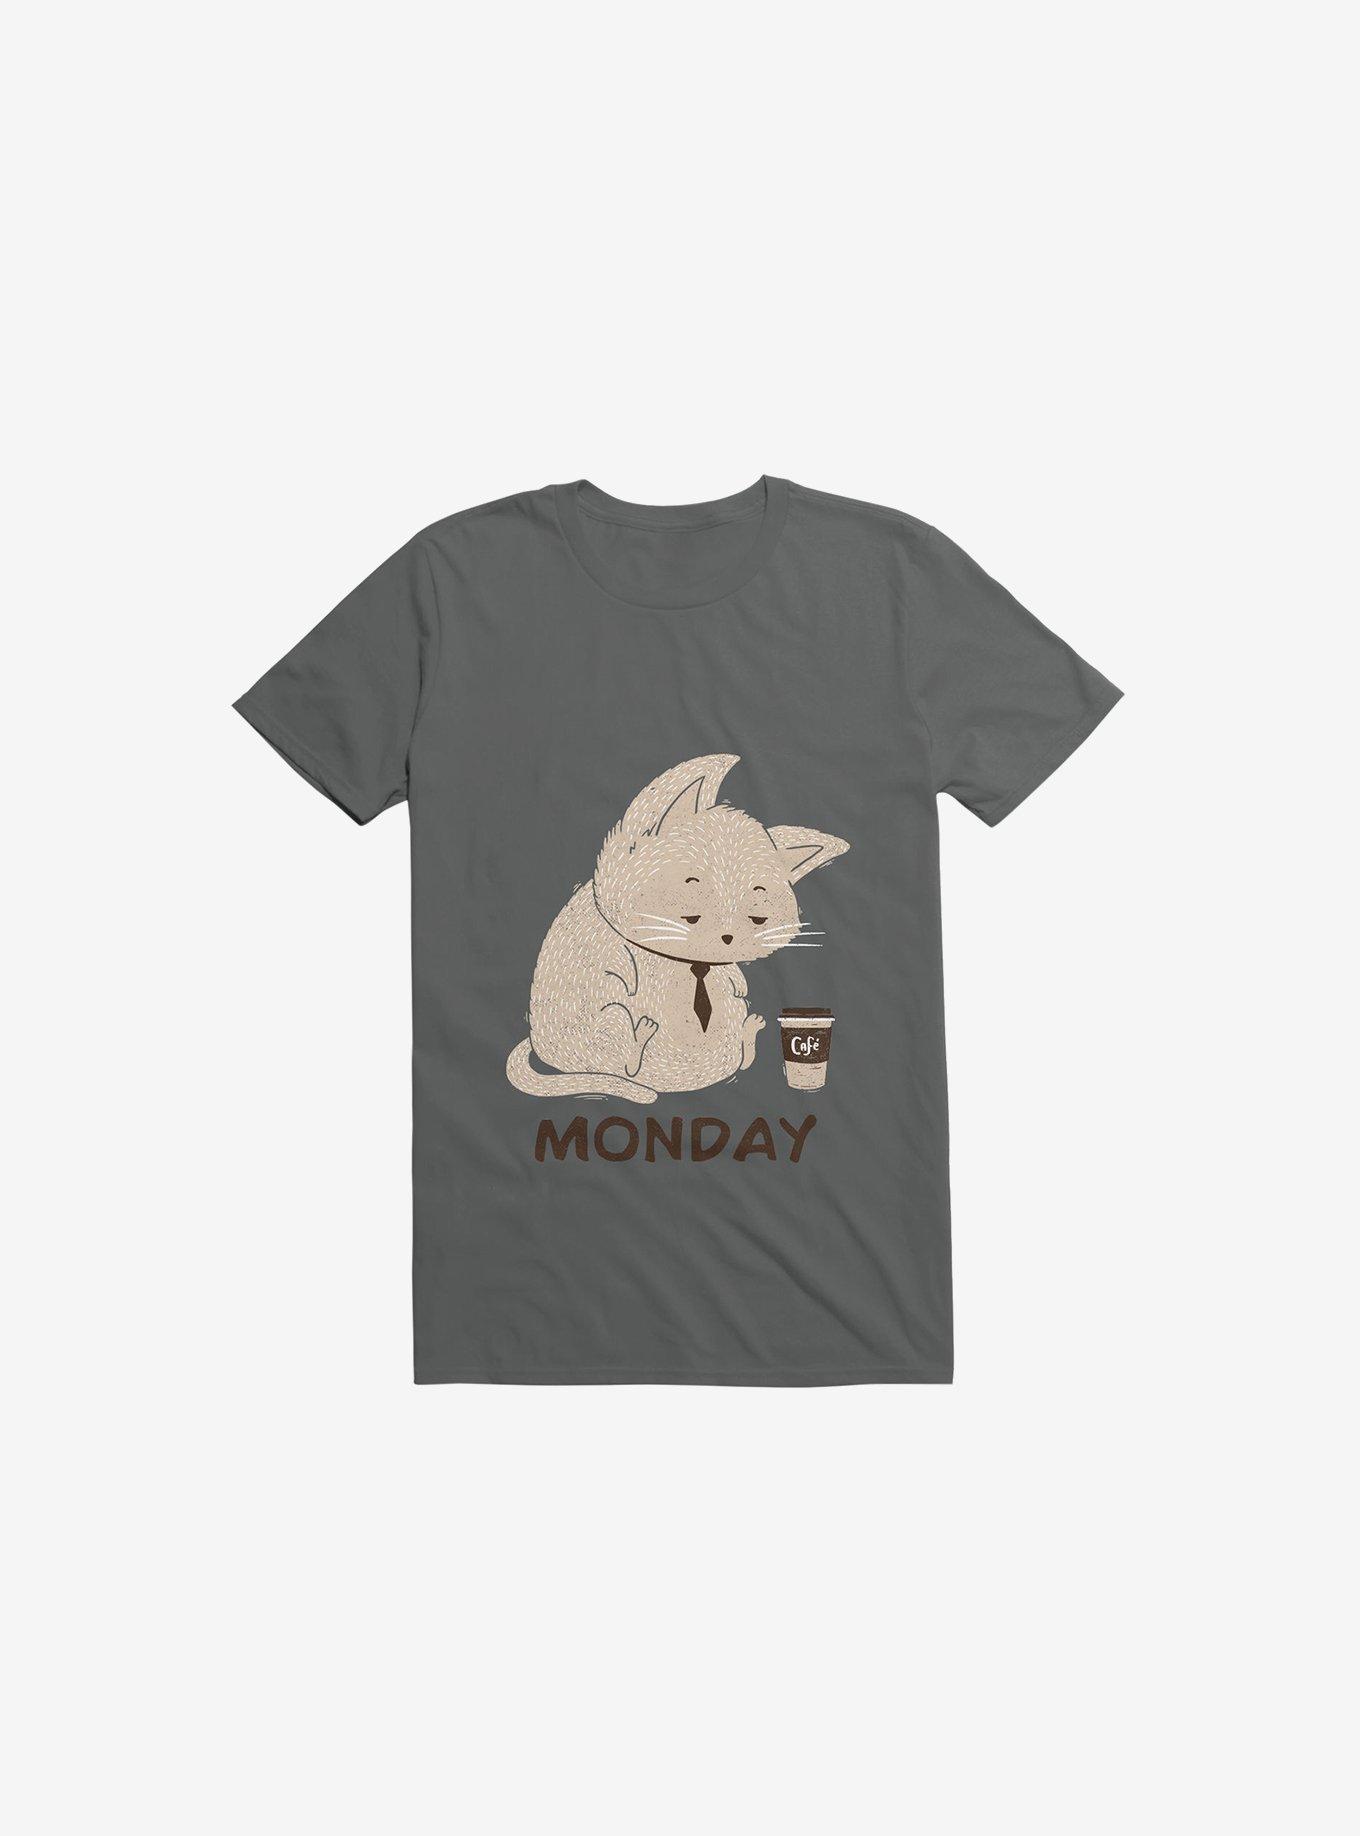 Monday Cat Charcoal Grey T-Shirt